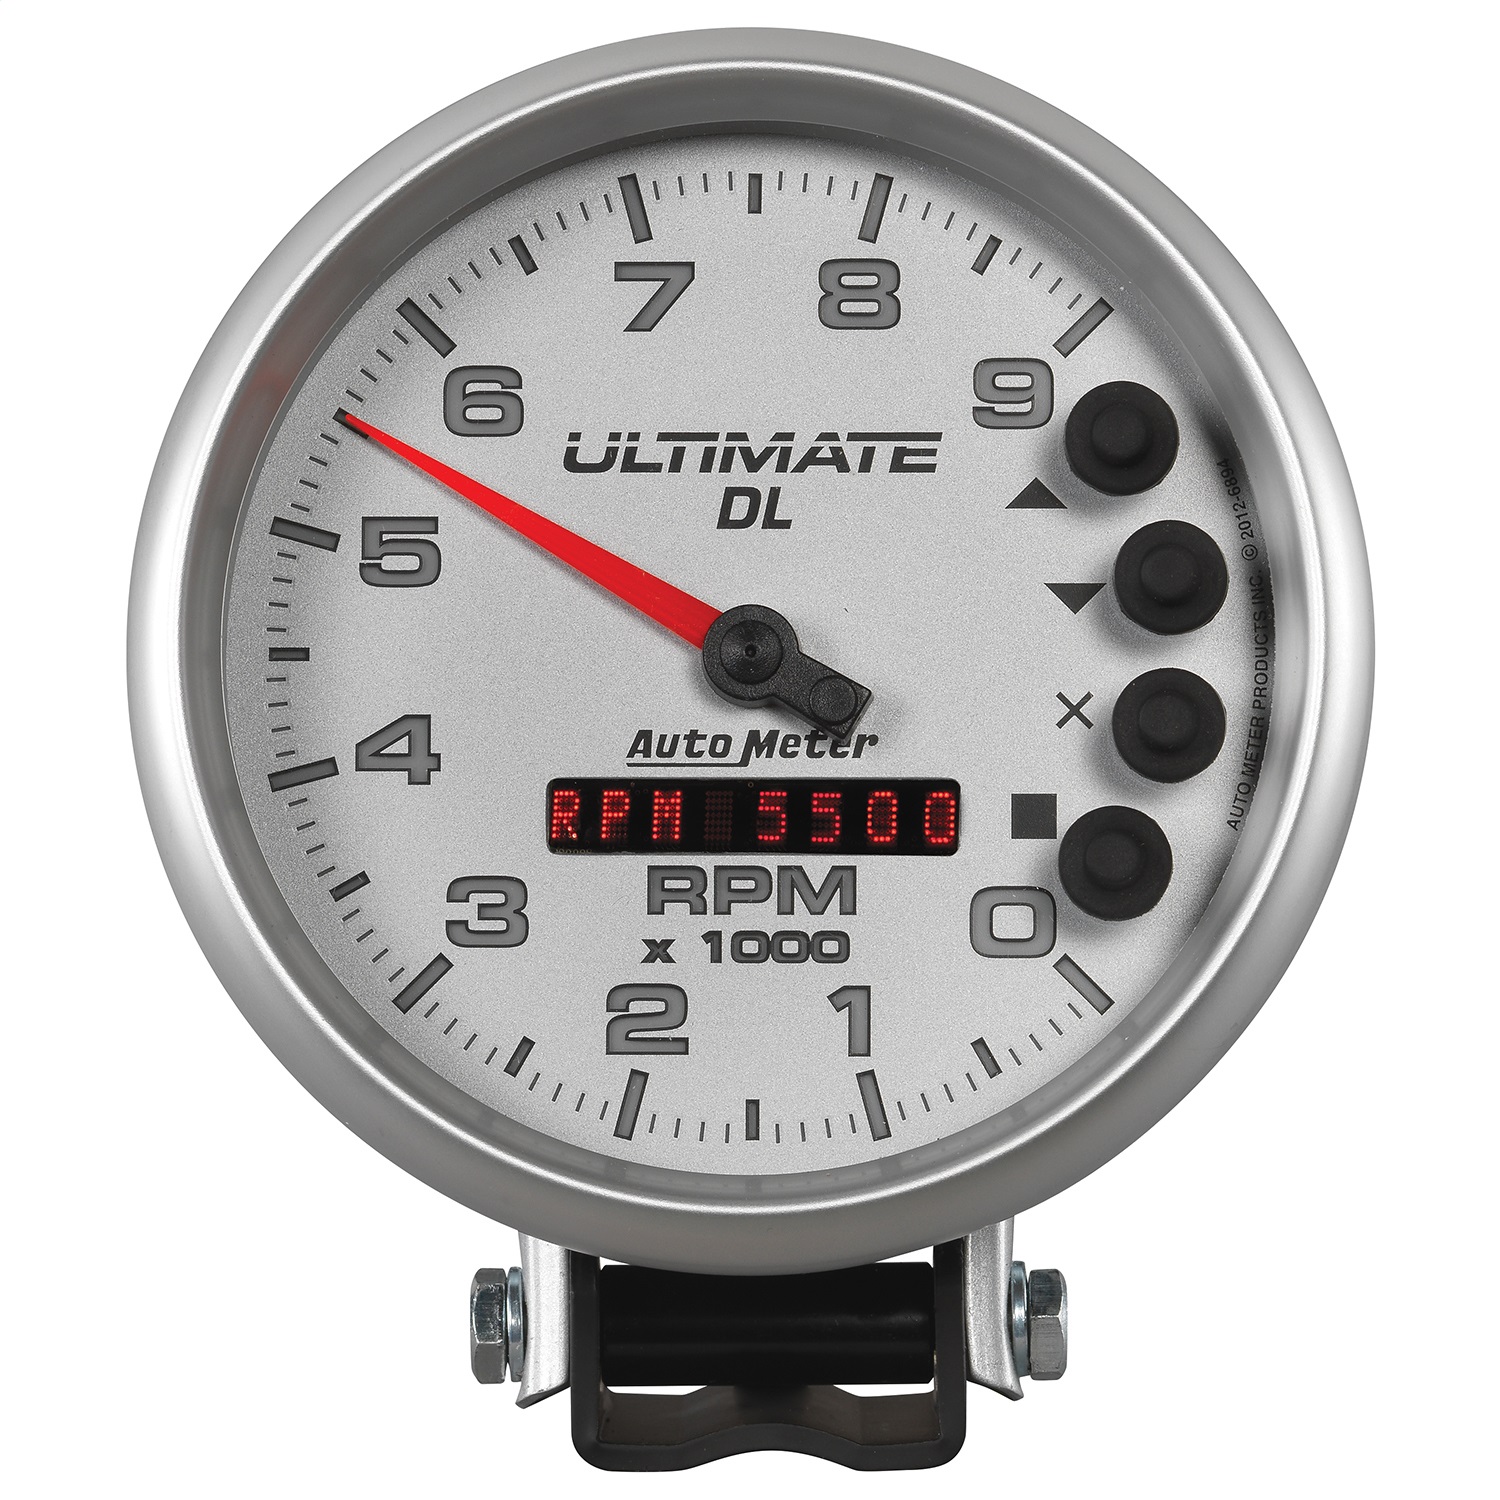 Auto Meter Auto Meter 6894 Ultimate DL Playback Tachometer